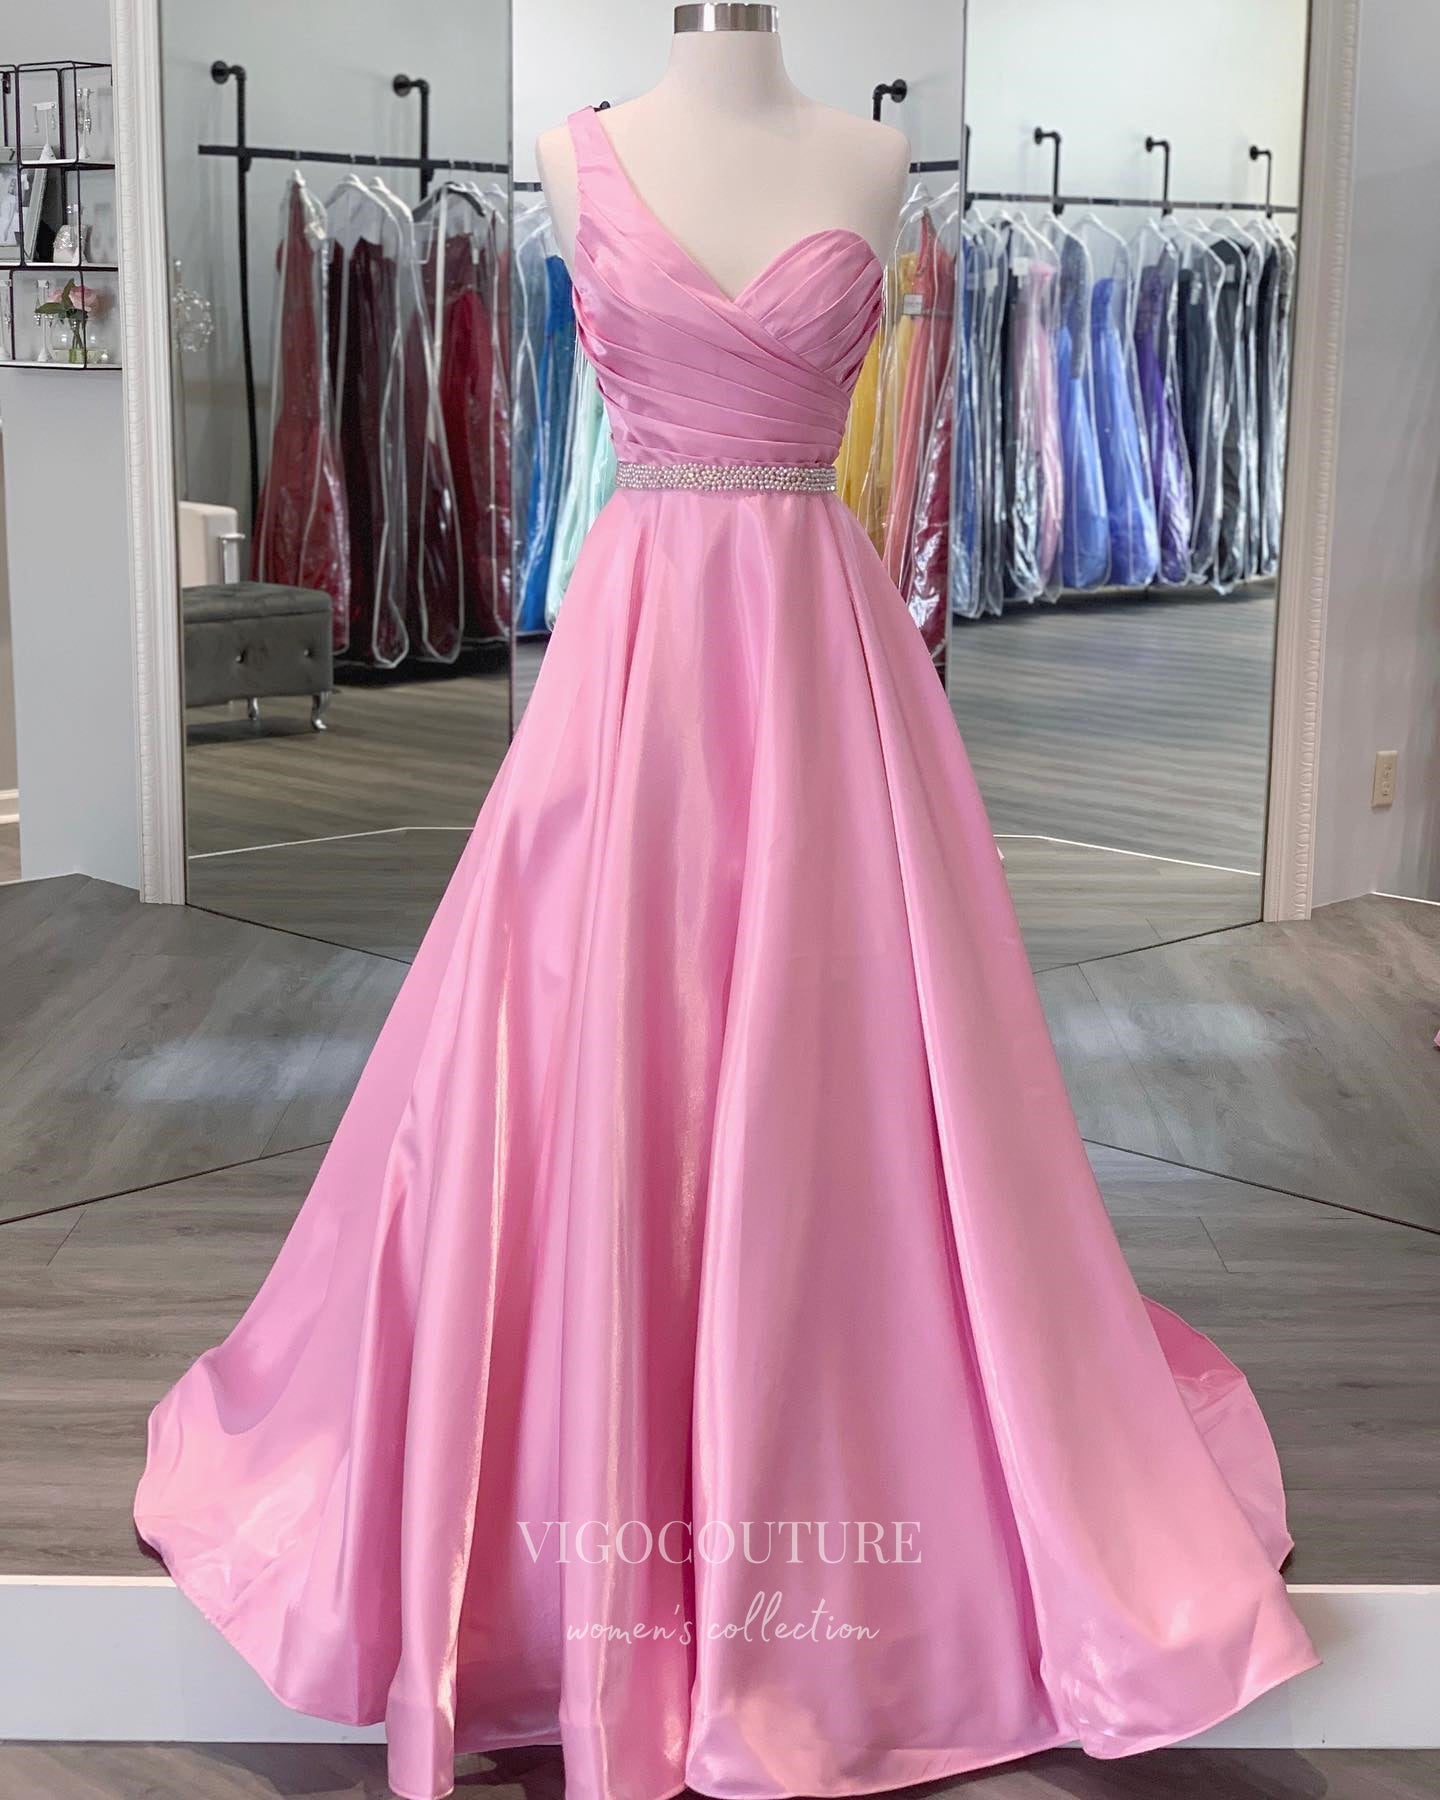 vigocouture-Pink One Shoulder Prom Dresses Pleated Satin Evening Dress 21801-Prom Dresses-vigocouture-Pink-US2-